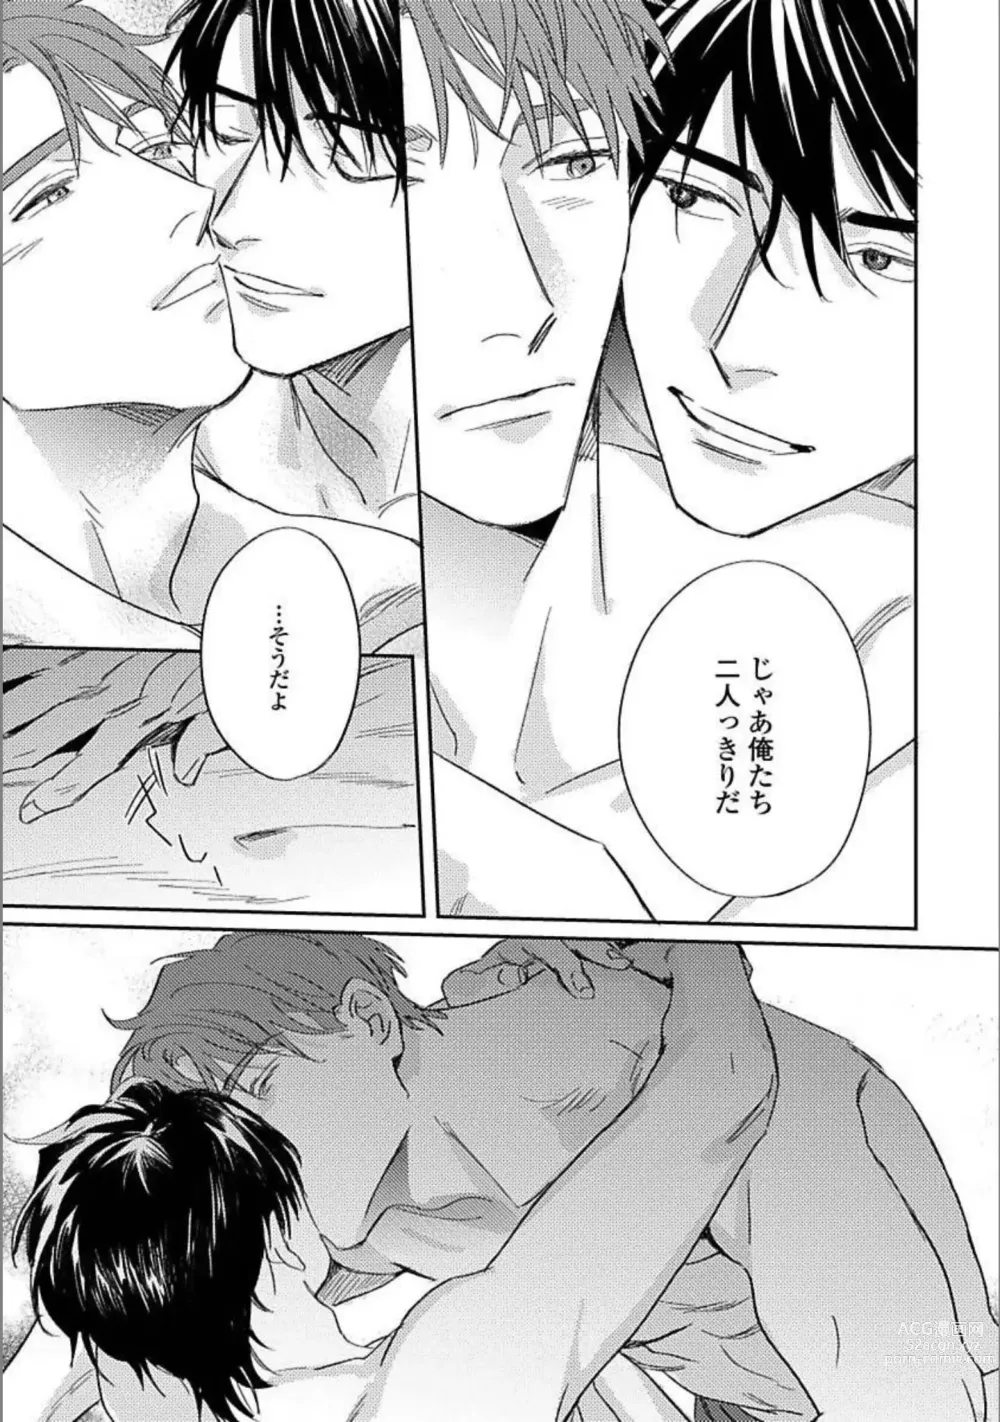 Page 204 of manga Hitori de Yoru wa Koerarenai - I Cant Stand Another Night Alone